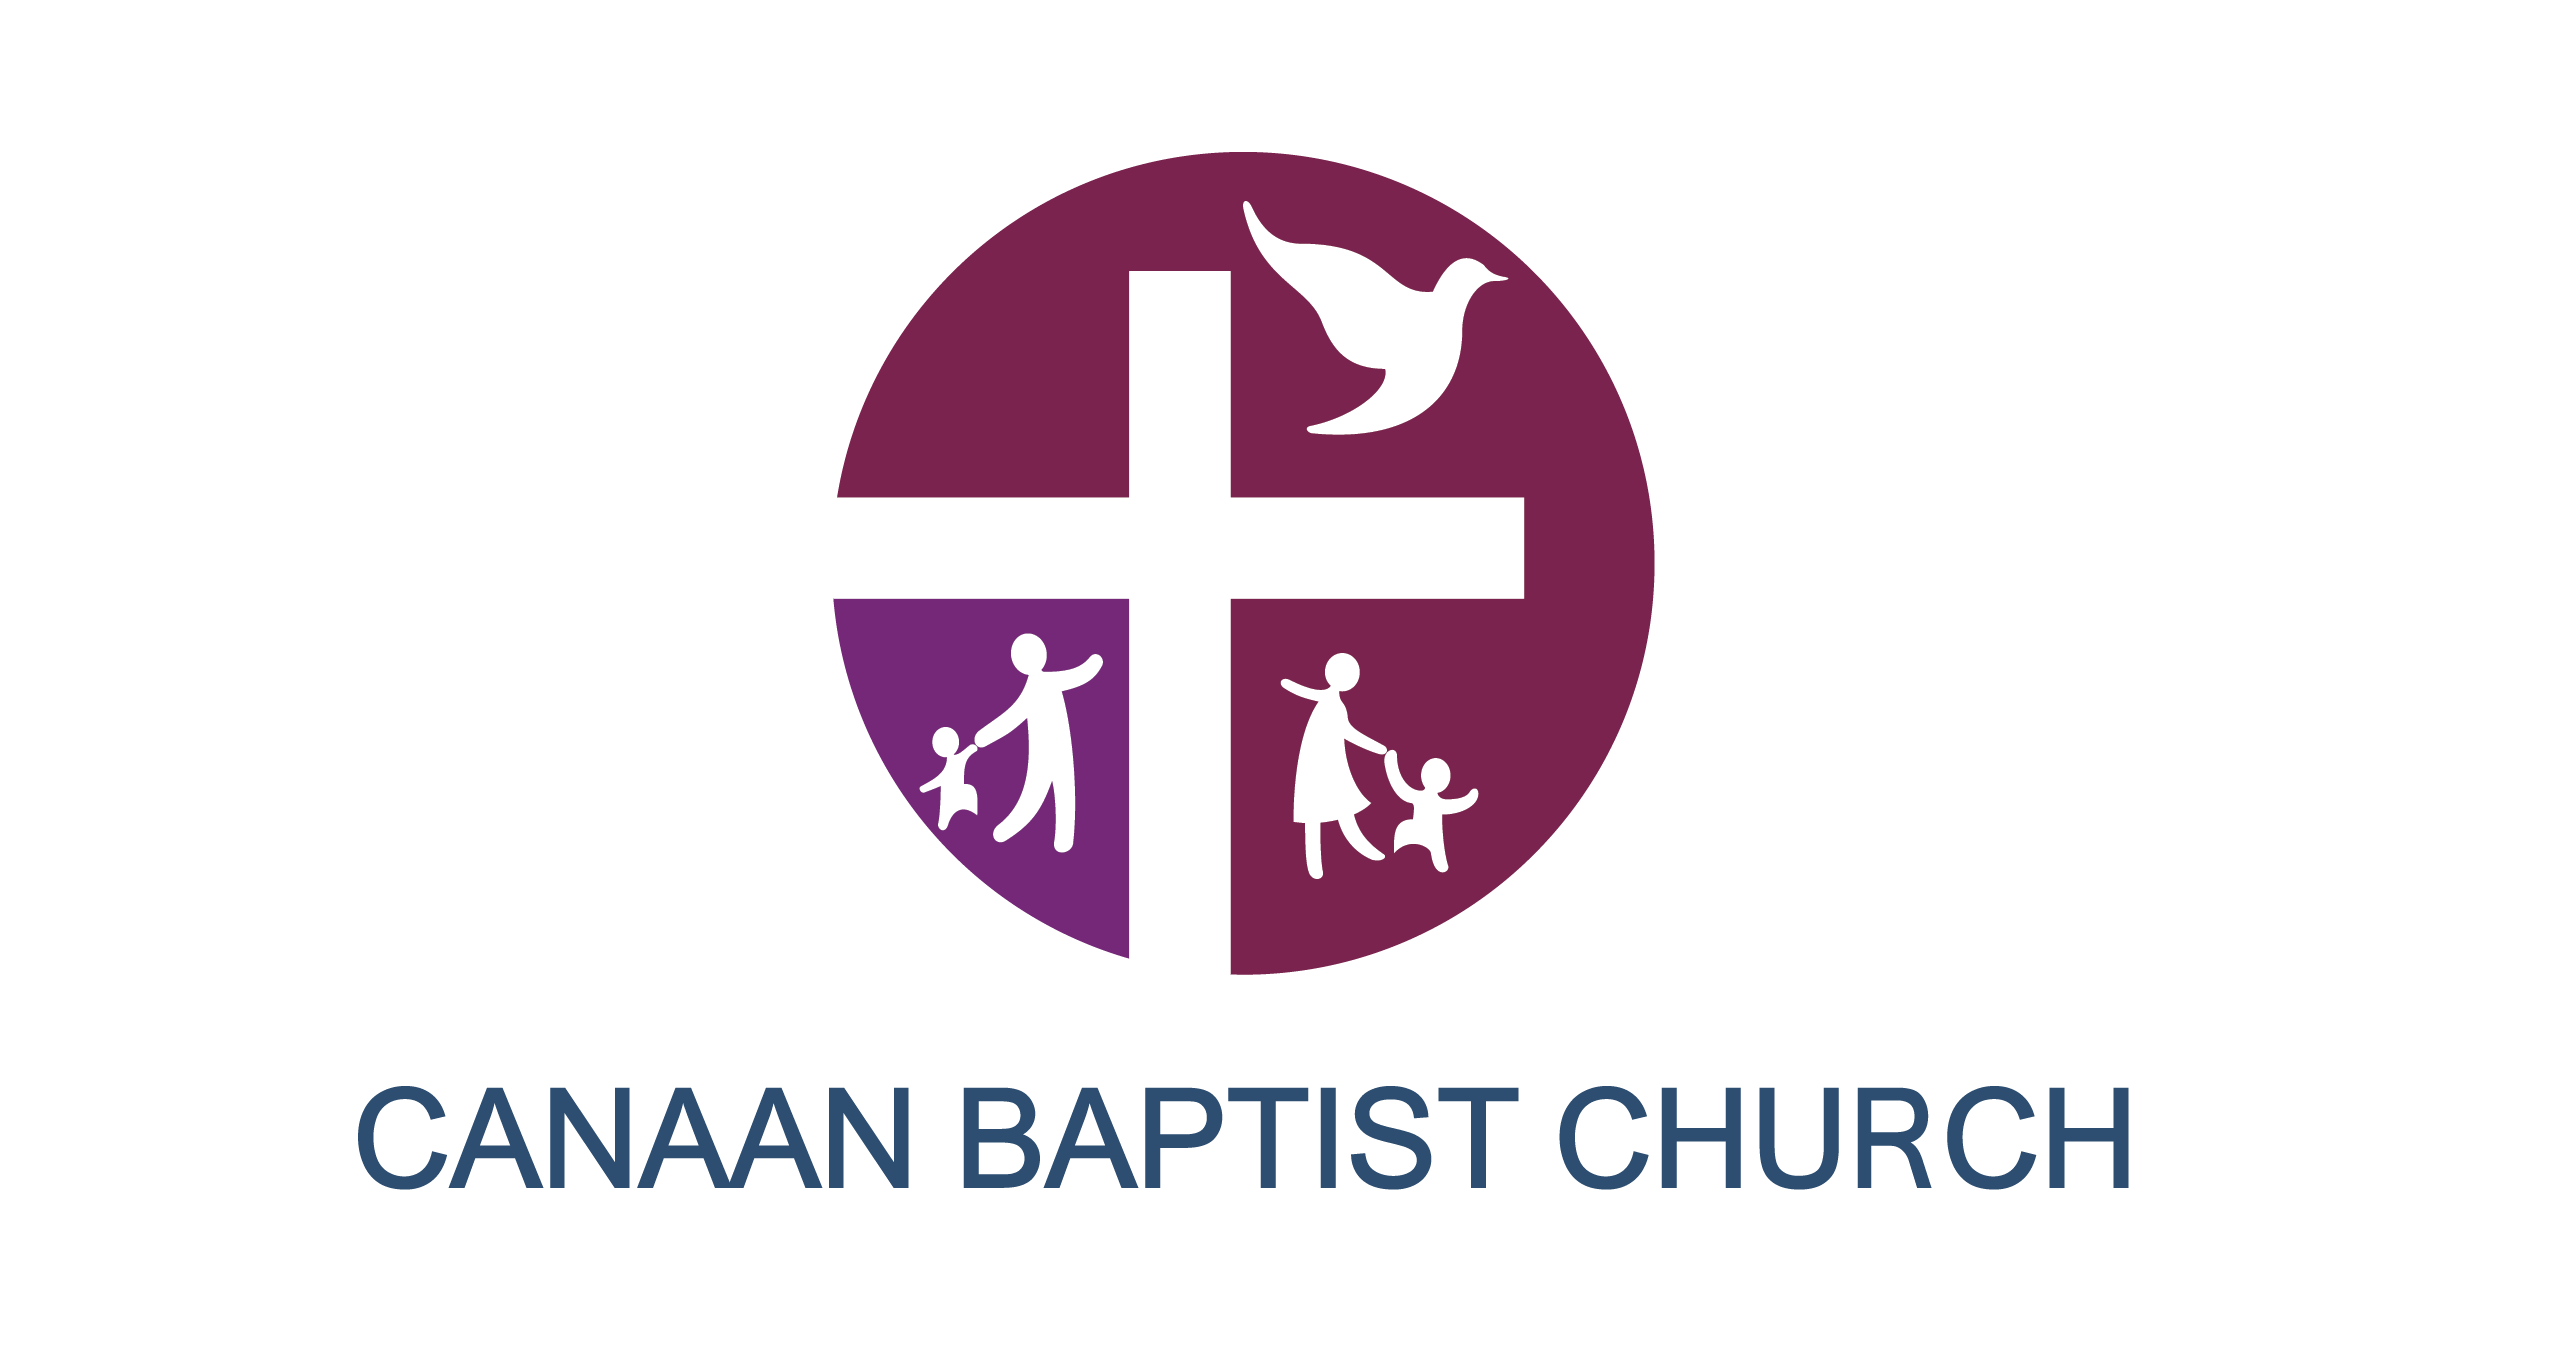 CANAAN BAPTIST CHURCH